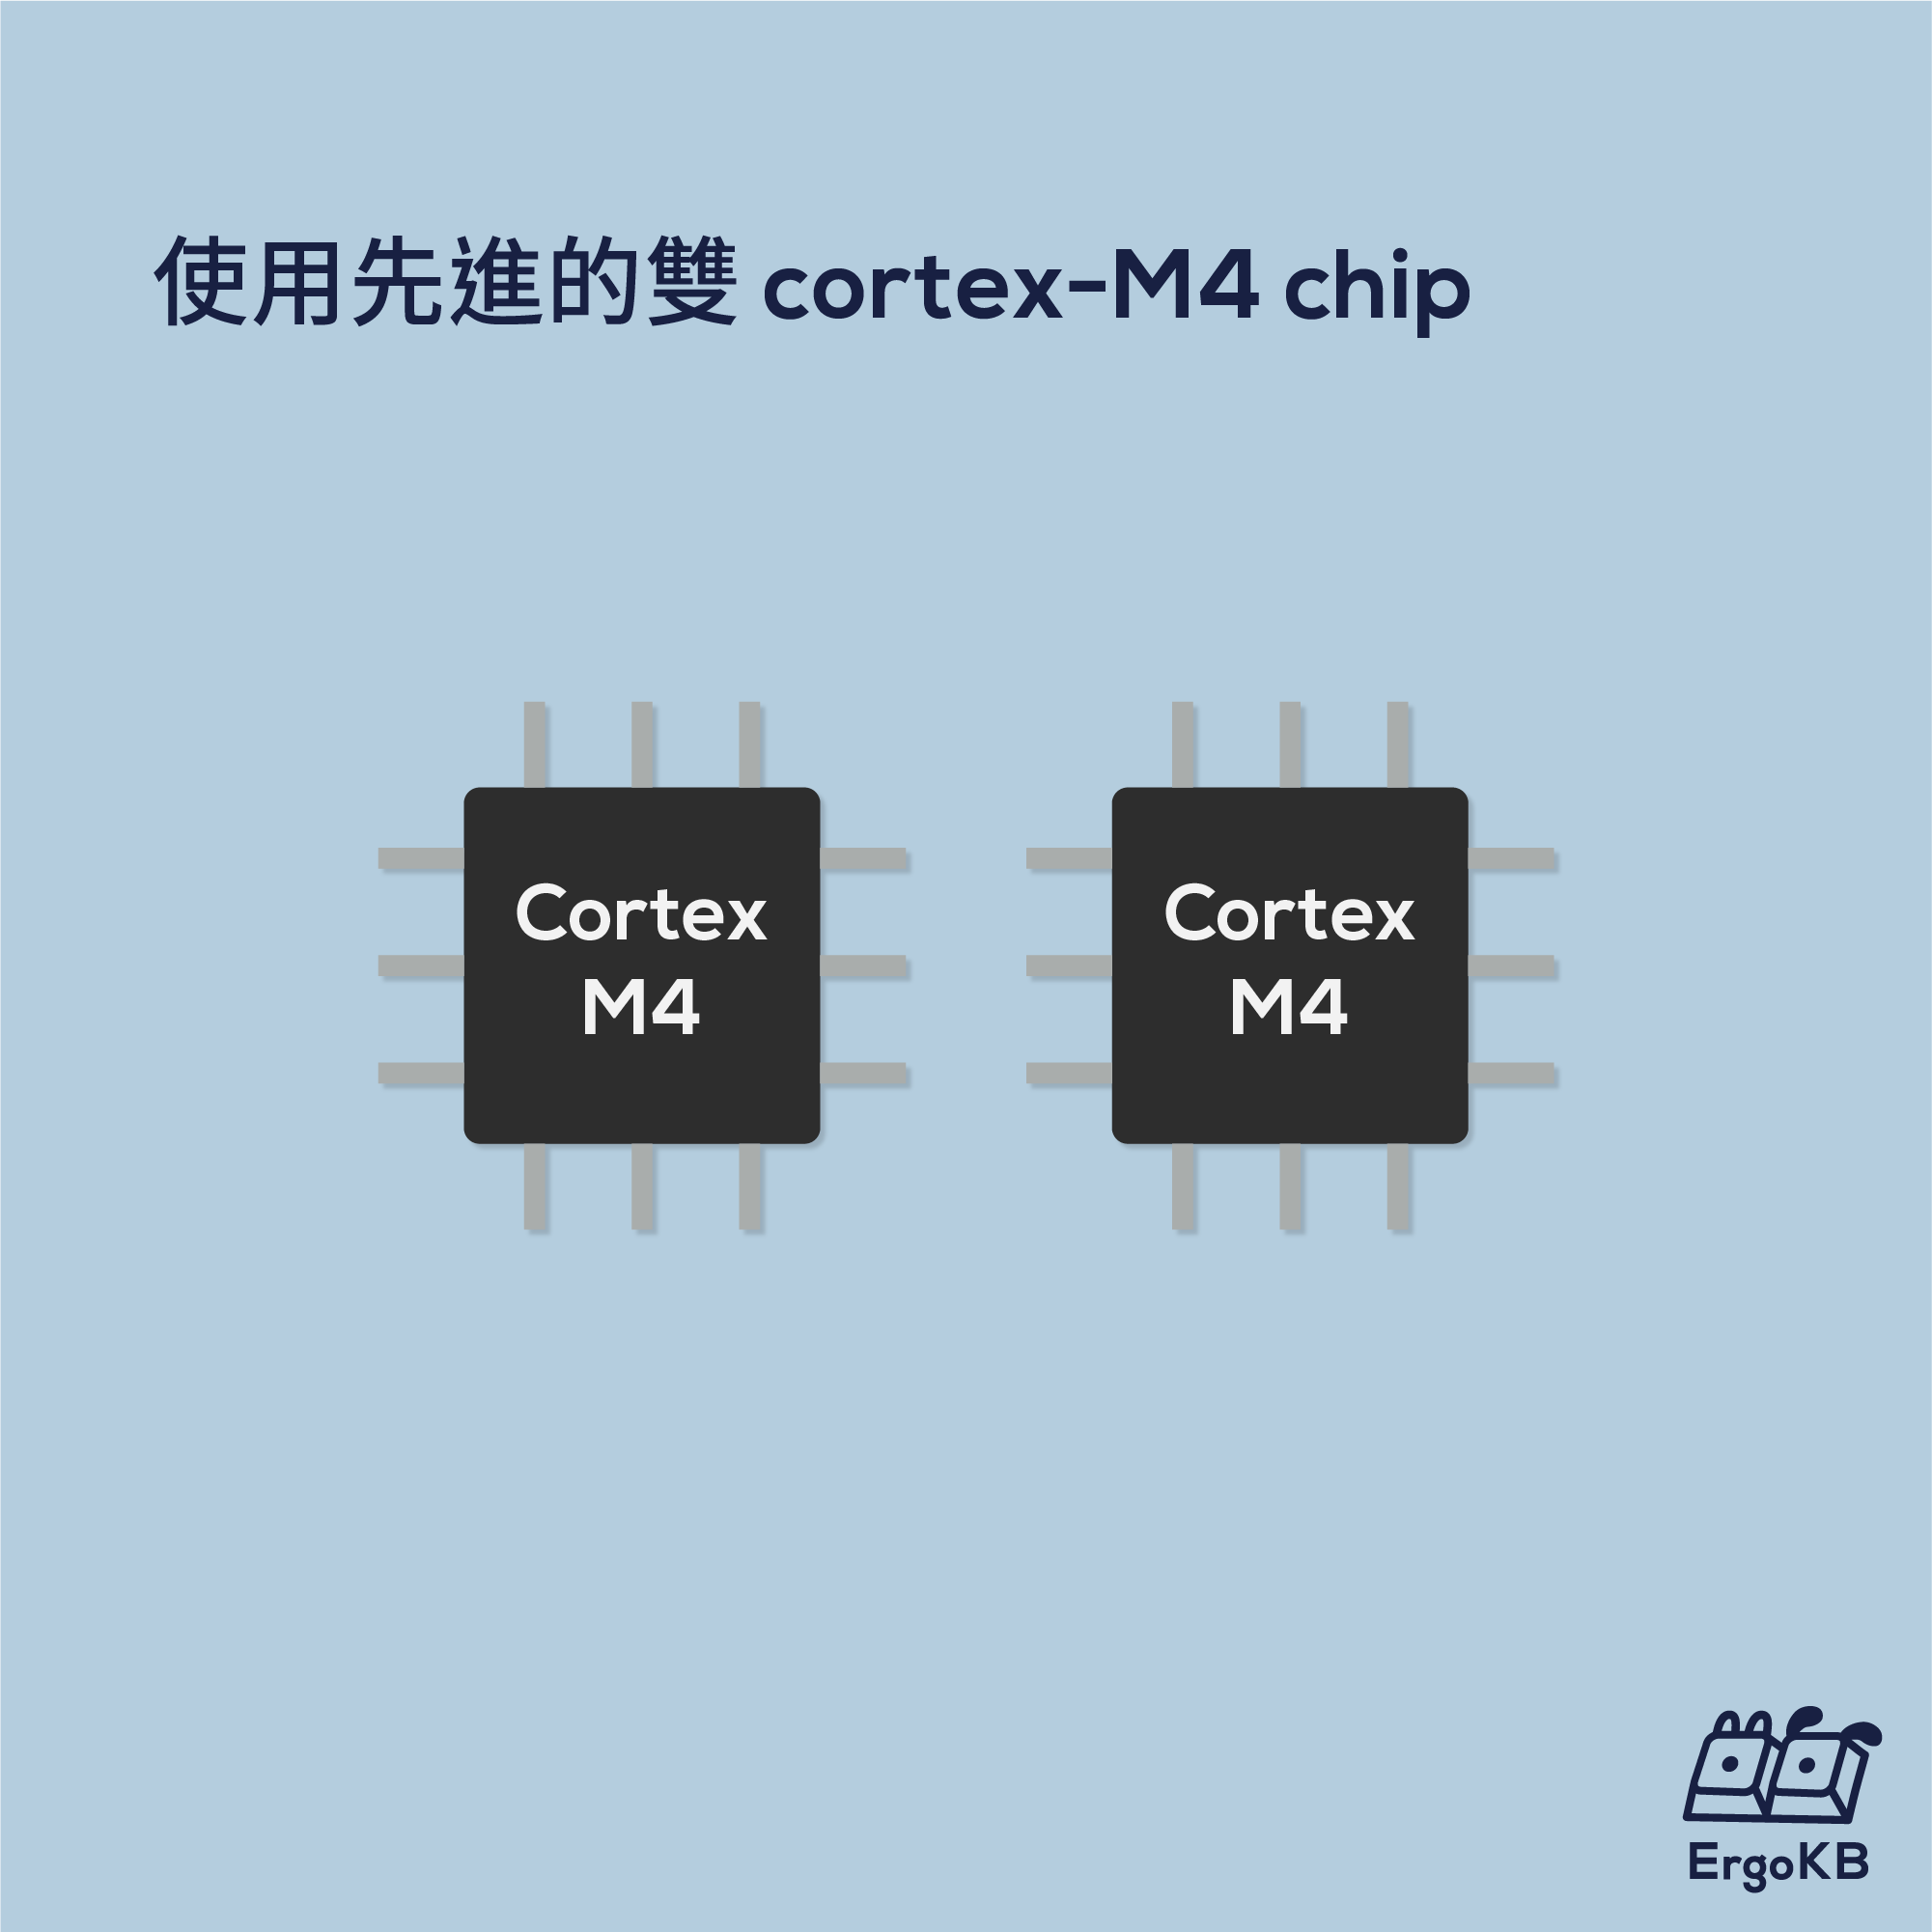 使用先進的雙 Cortex-M4 chip